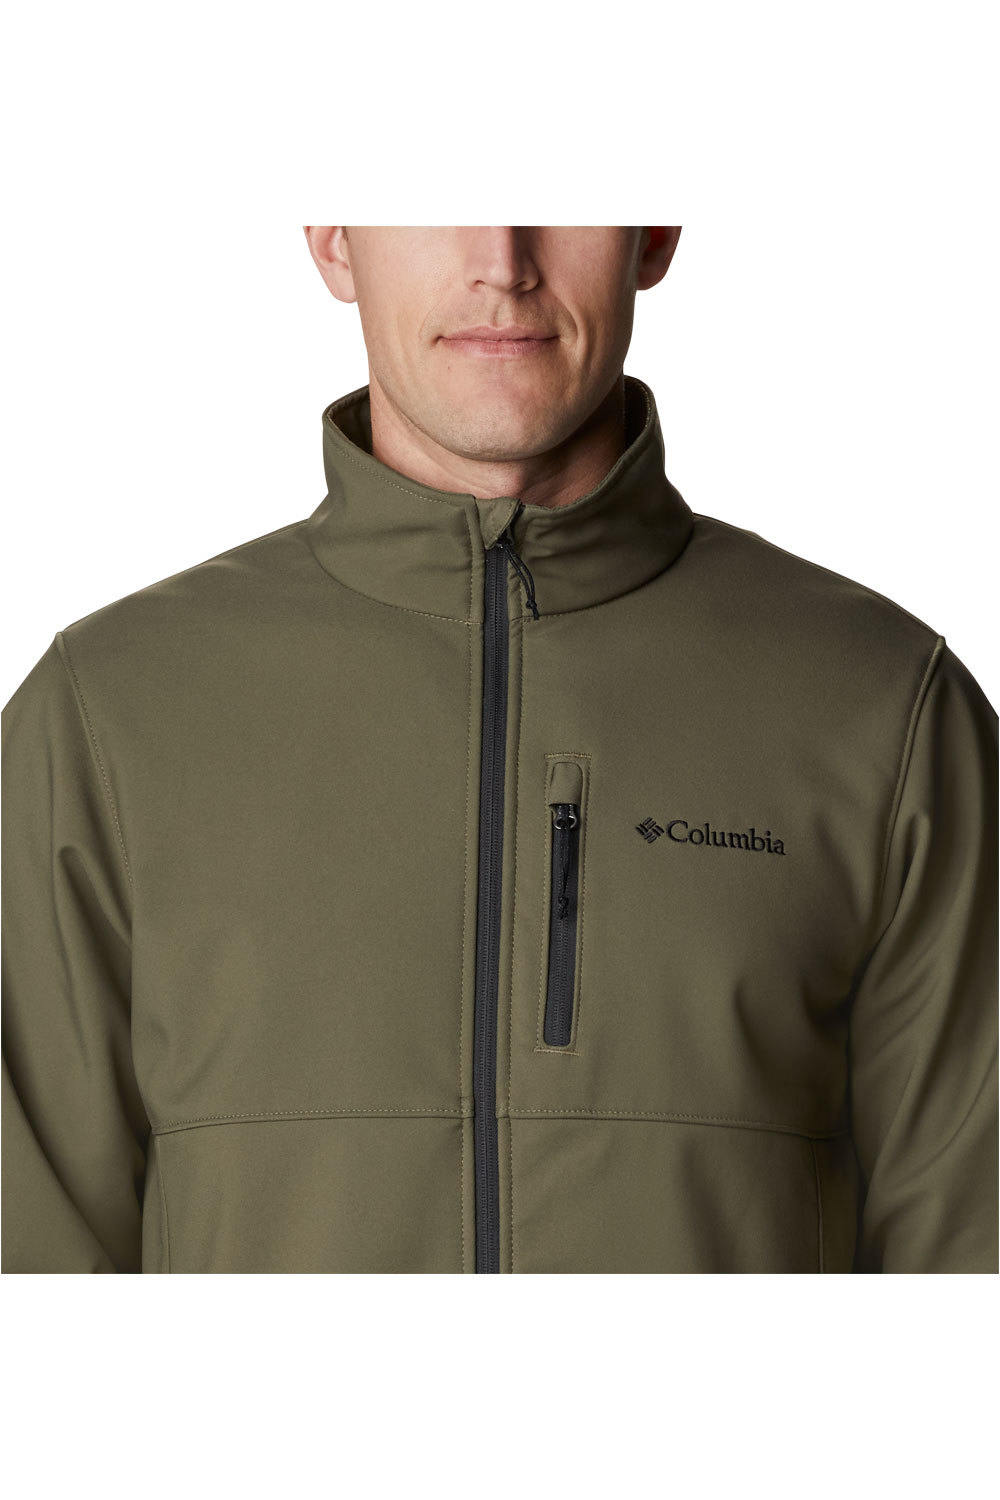 Columbia chaqueta softshell hombre Ascender  Softshell Jacket vista detalle